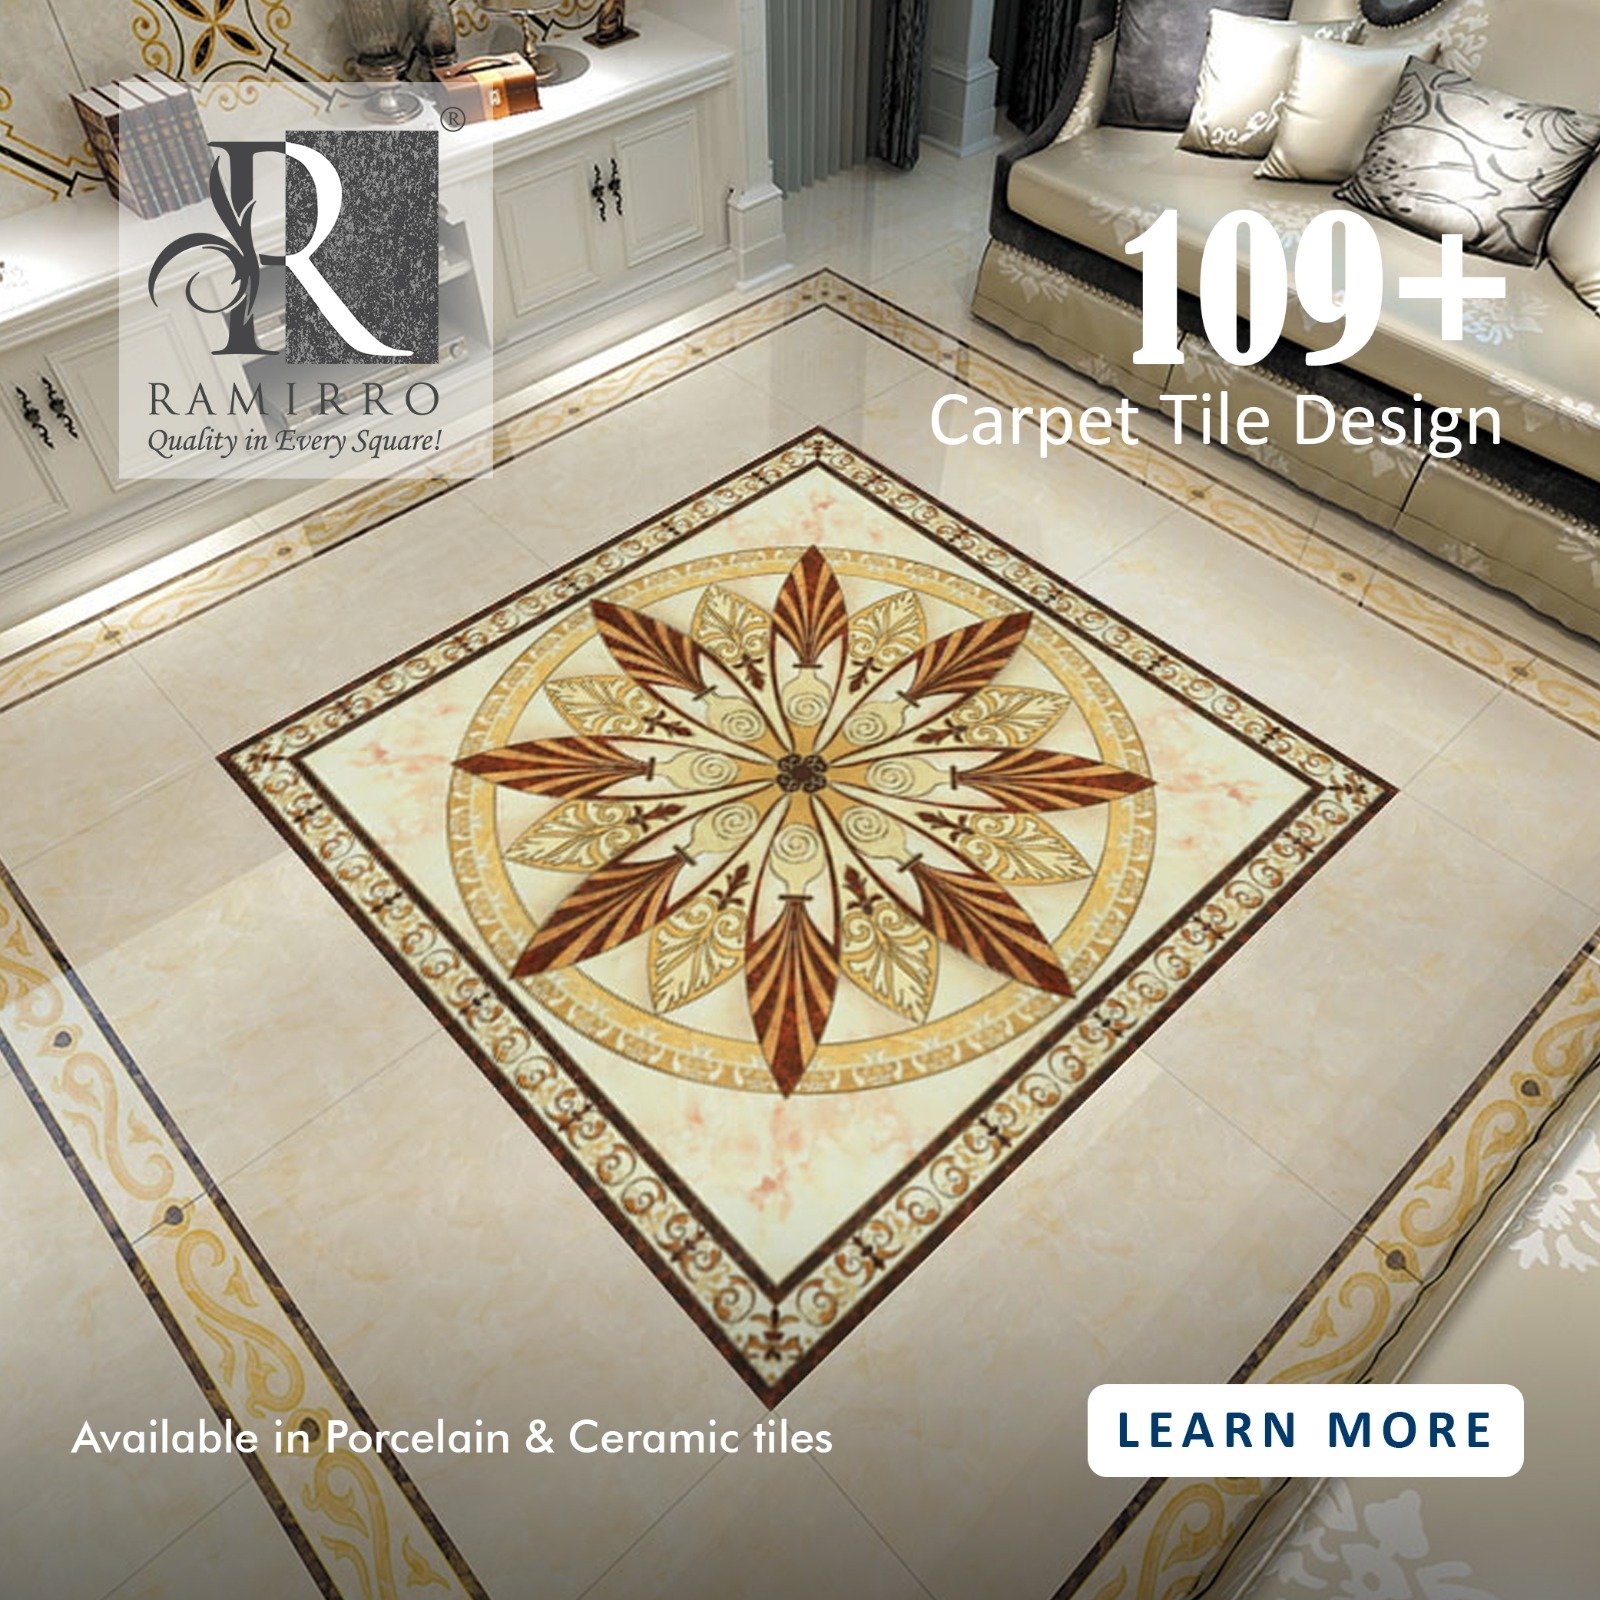 109 Carpet Tile Design Available In Porcelain Ceramic Tiles Ramirro